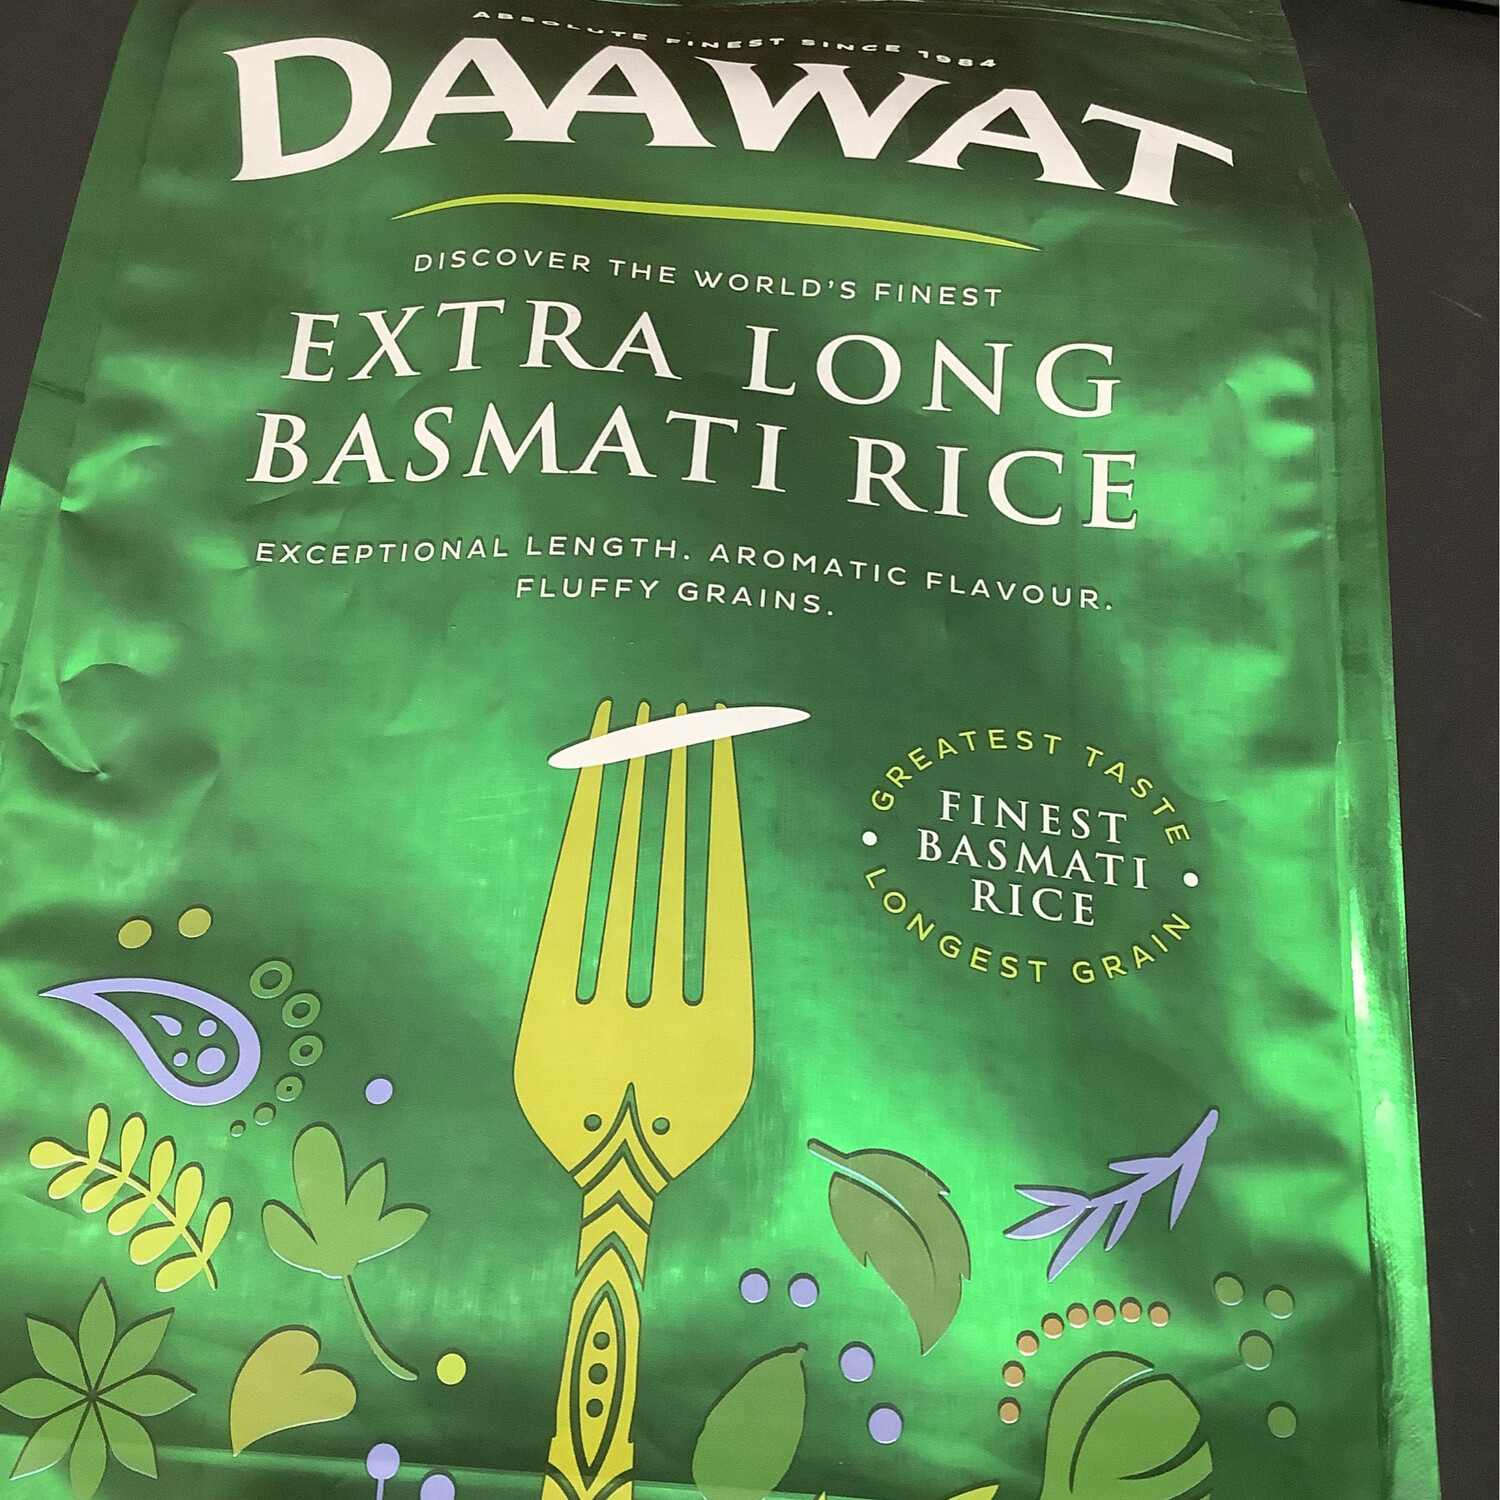 Daawat Extra Long Rice 5kg